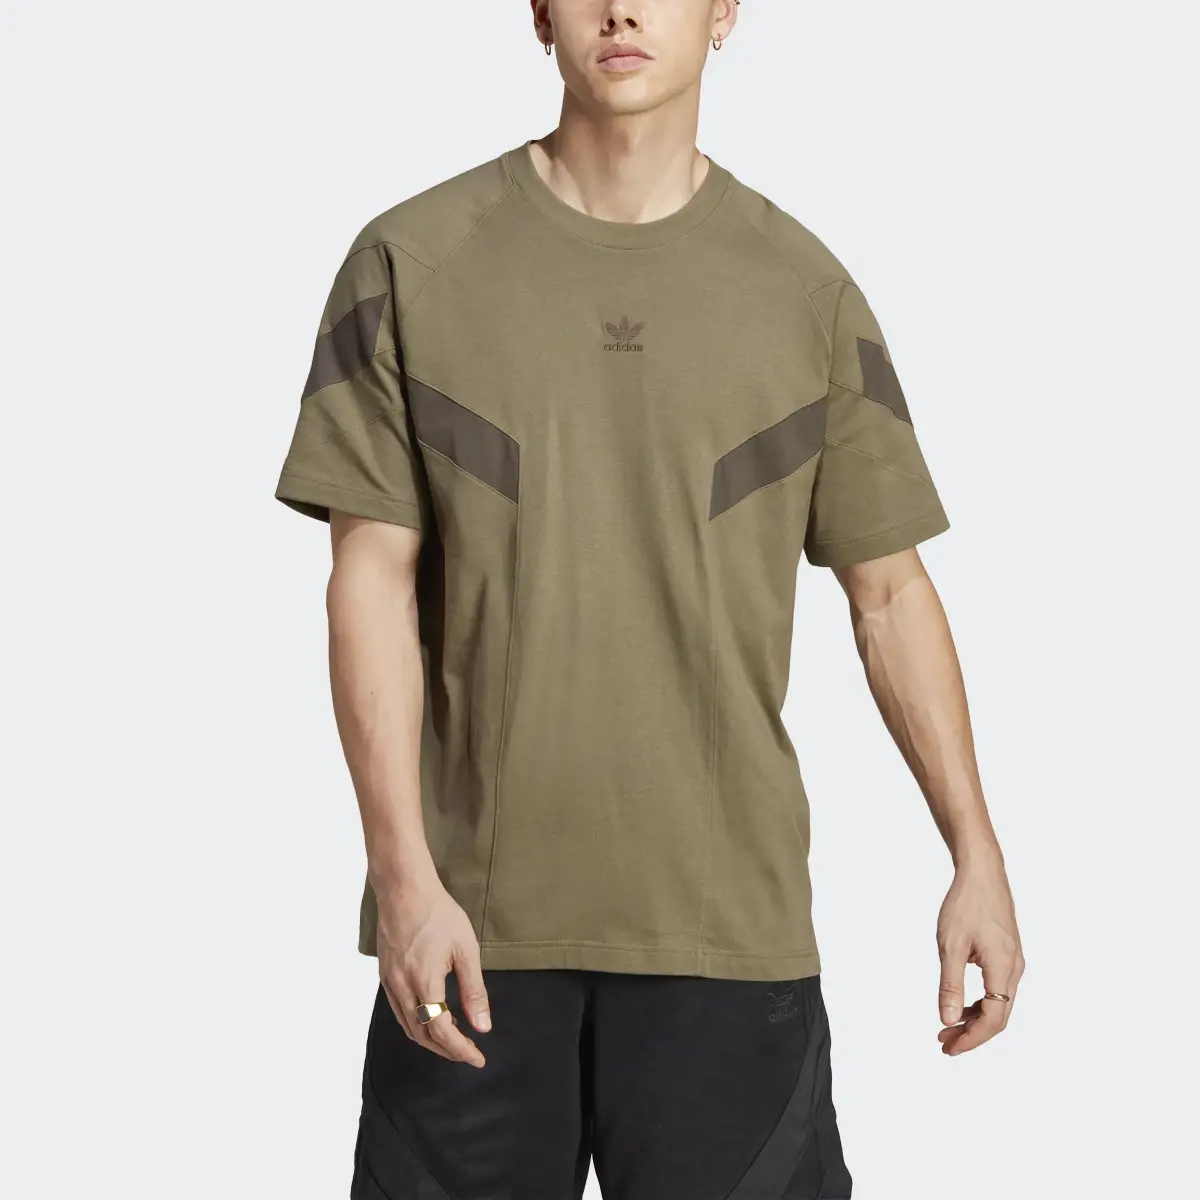 Adidas Rekive T-Shirt. 1